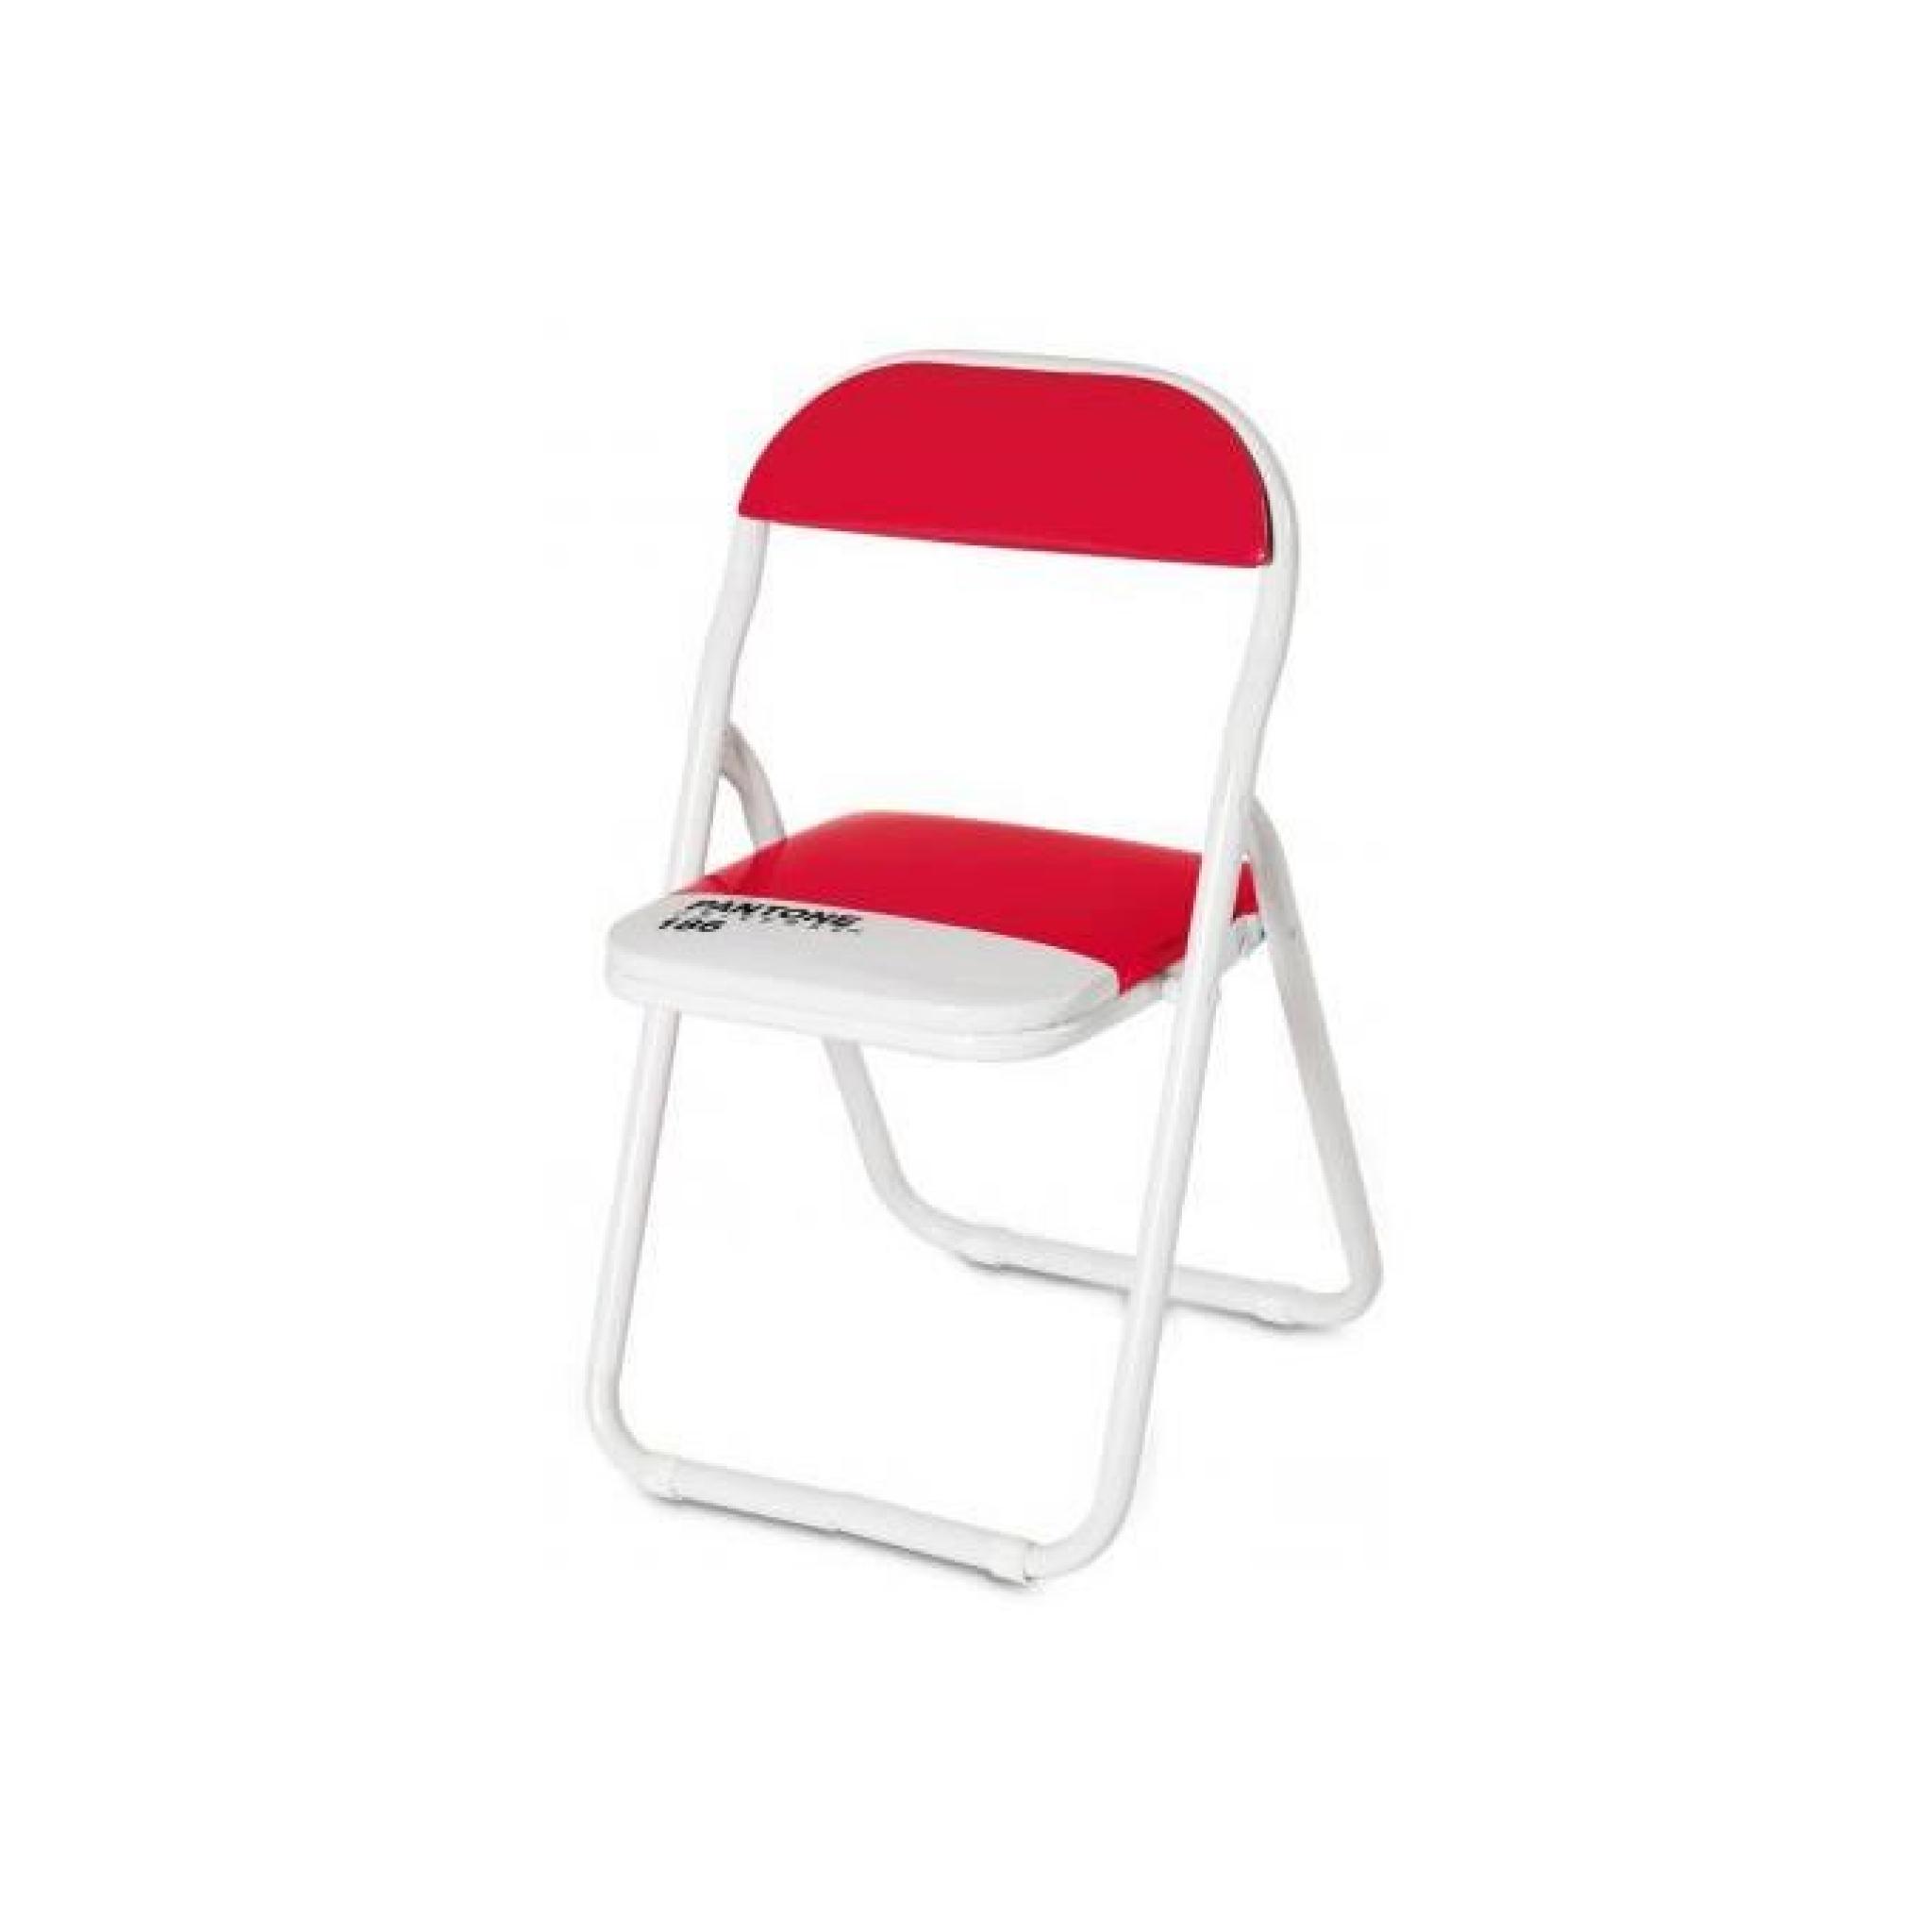 Petite chaise pliante Pantone rouge Firenze Seletti